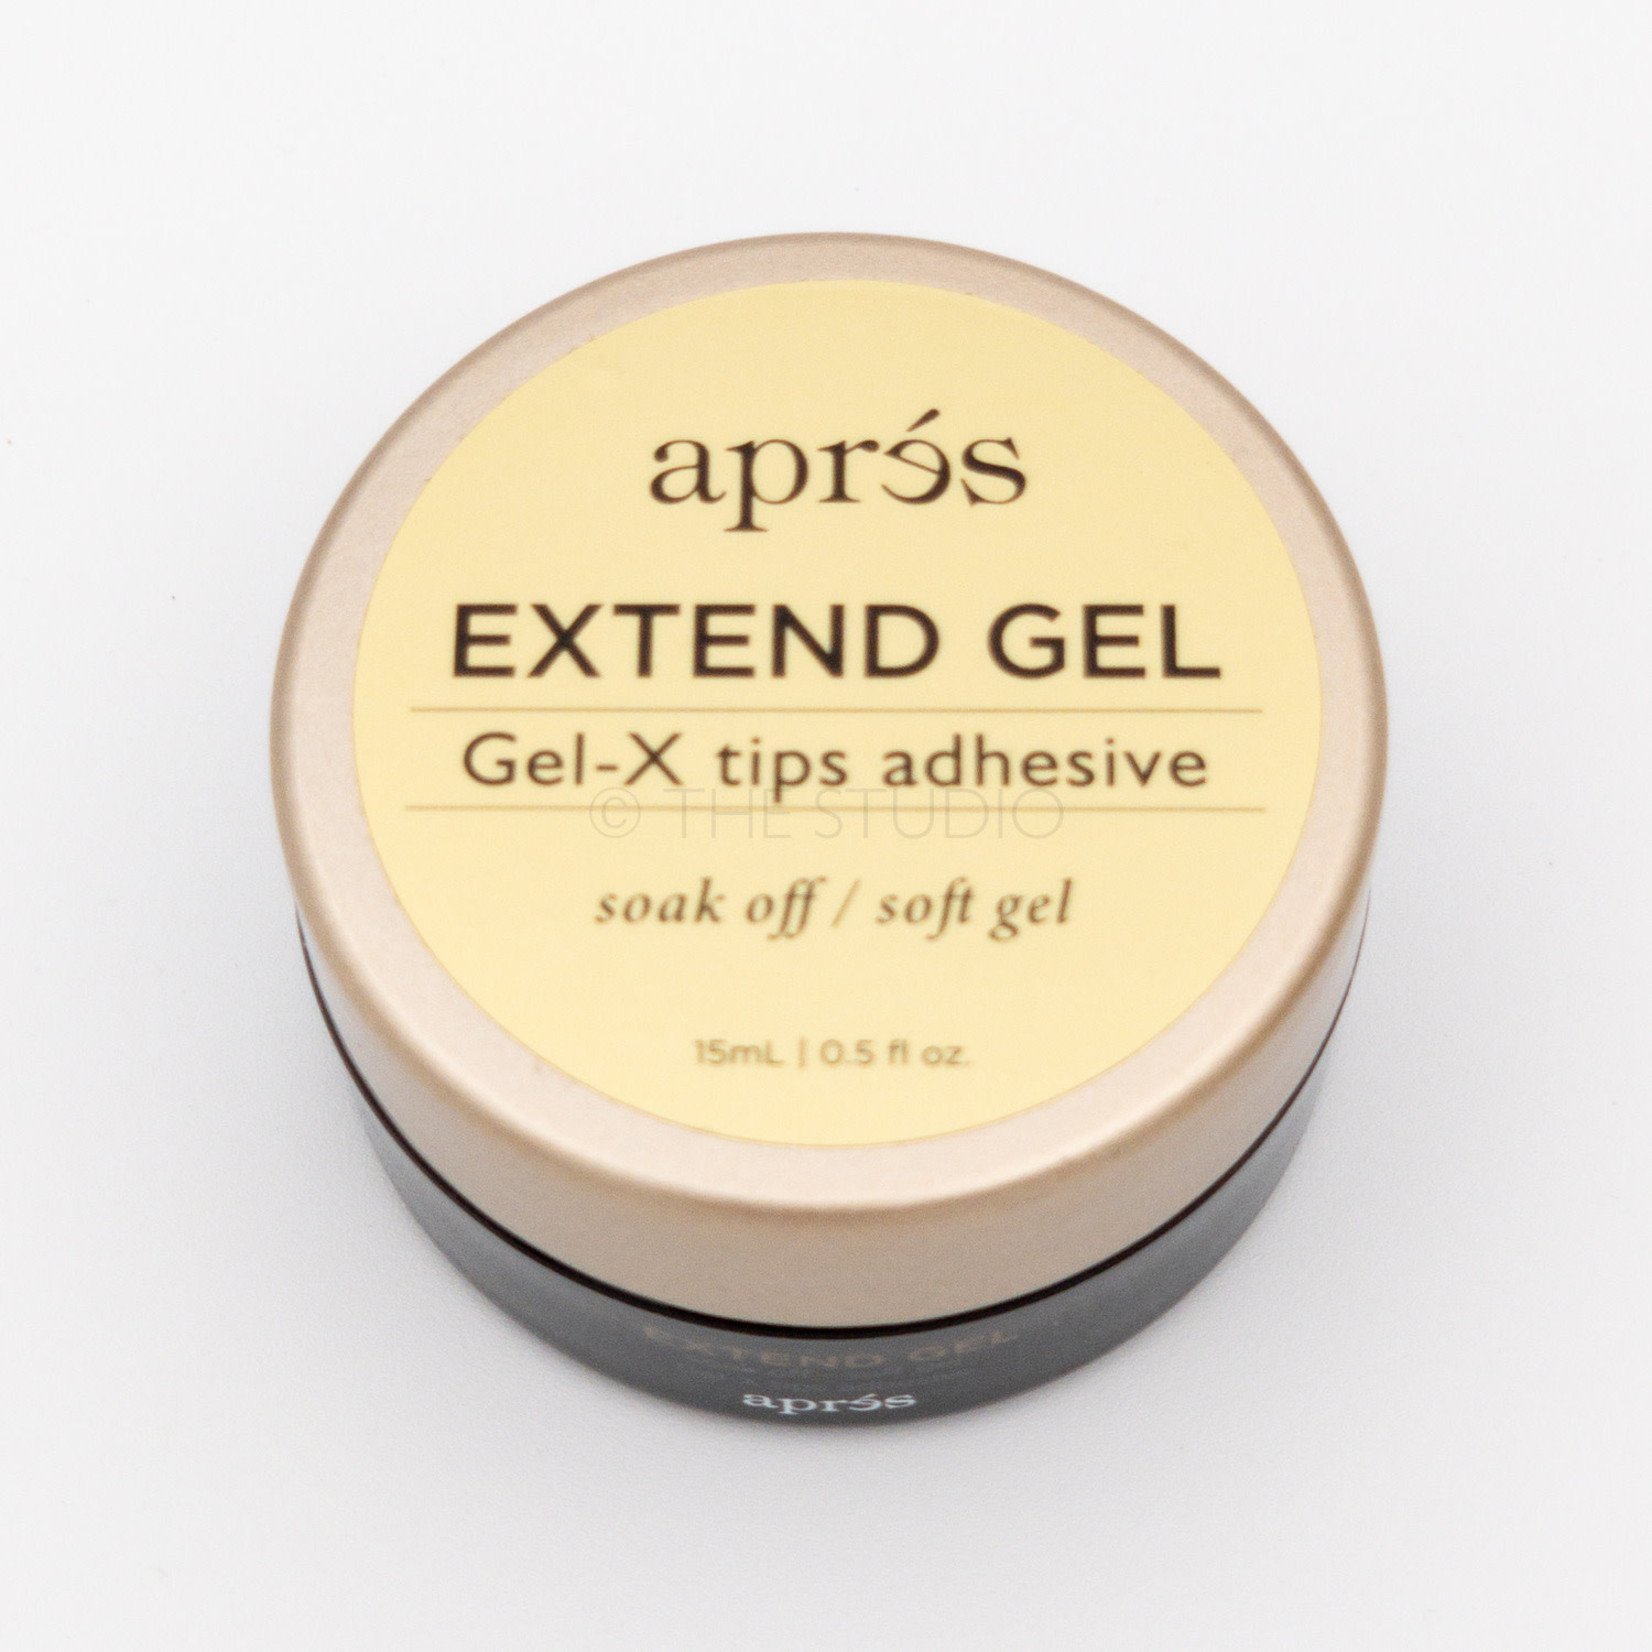 https://cdn.shoplightspeed.com/shops/641145/files/34632998/1652x1652x1/apres-apres-gel-x-extend-gel-tips-adhesive-jar-cle.jpg